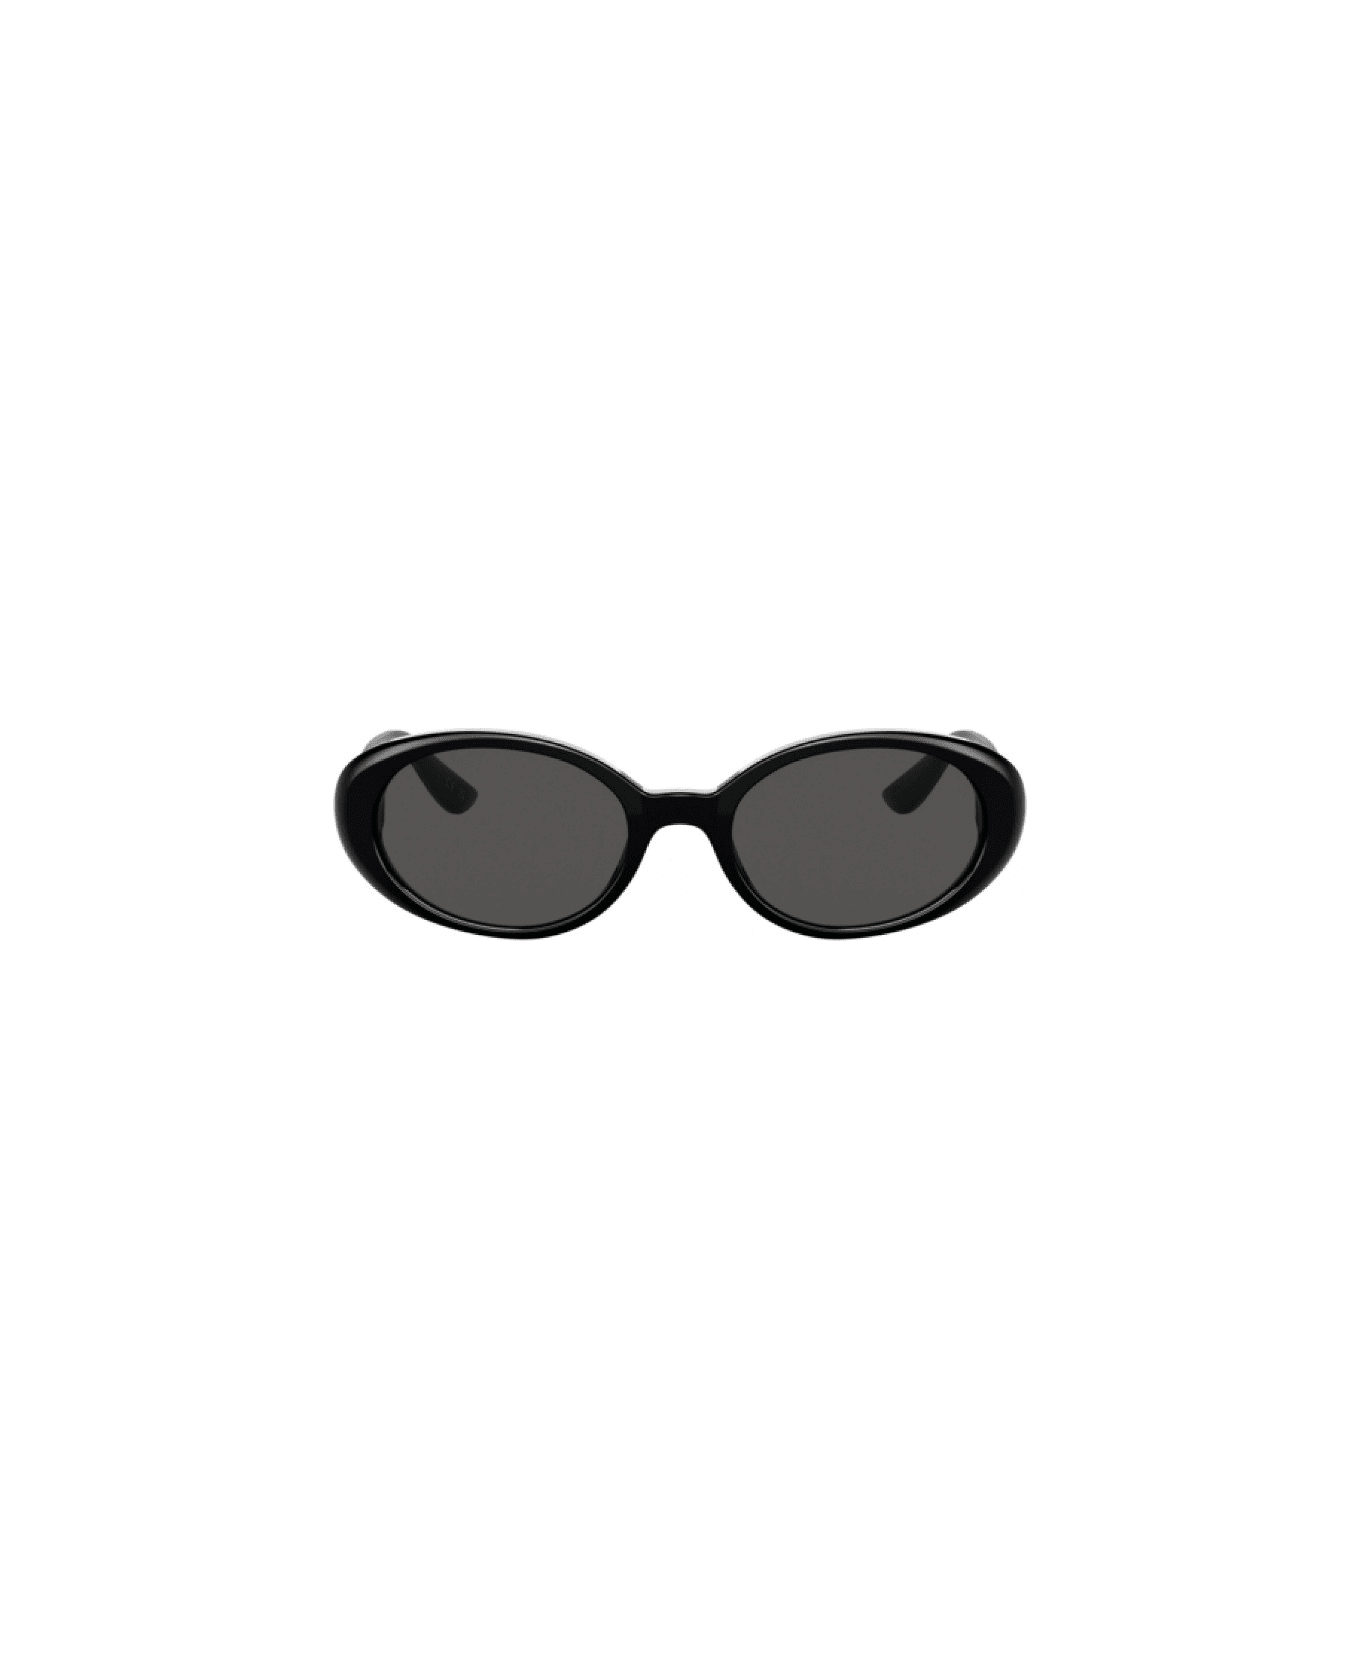 Dolce & Gabbana Eyewear DG4443S-501/87 Sunglasses - Nero サングラス